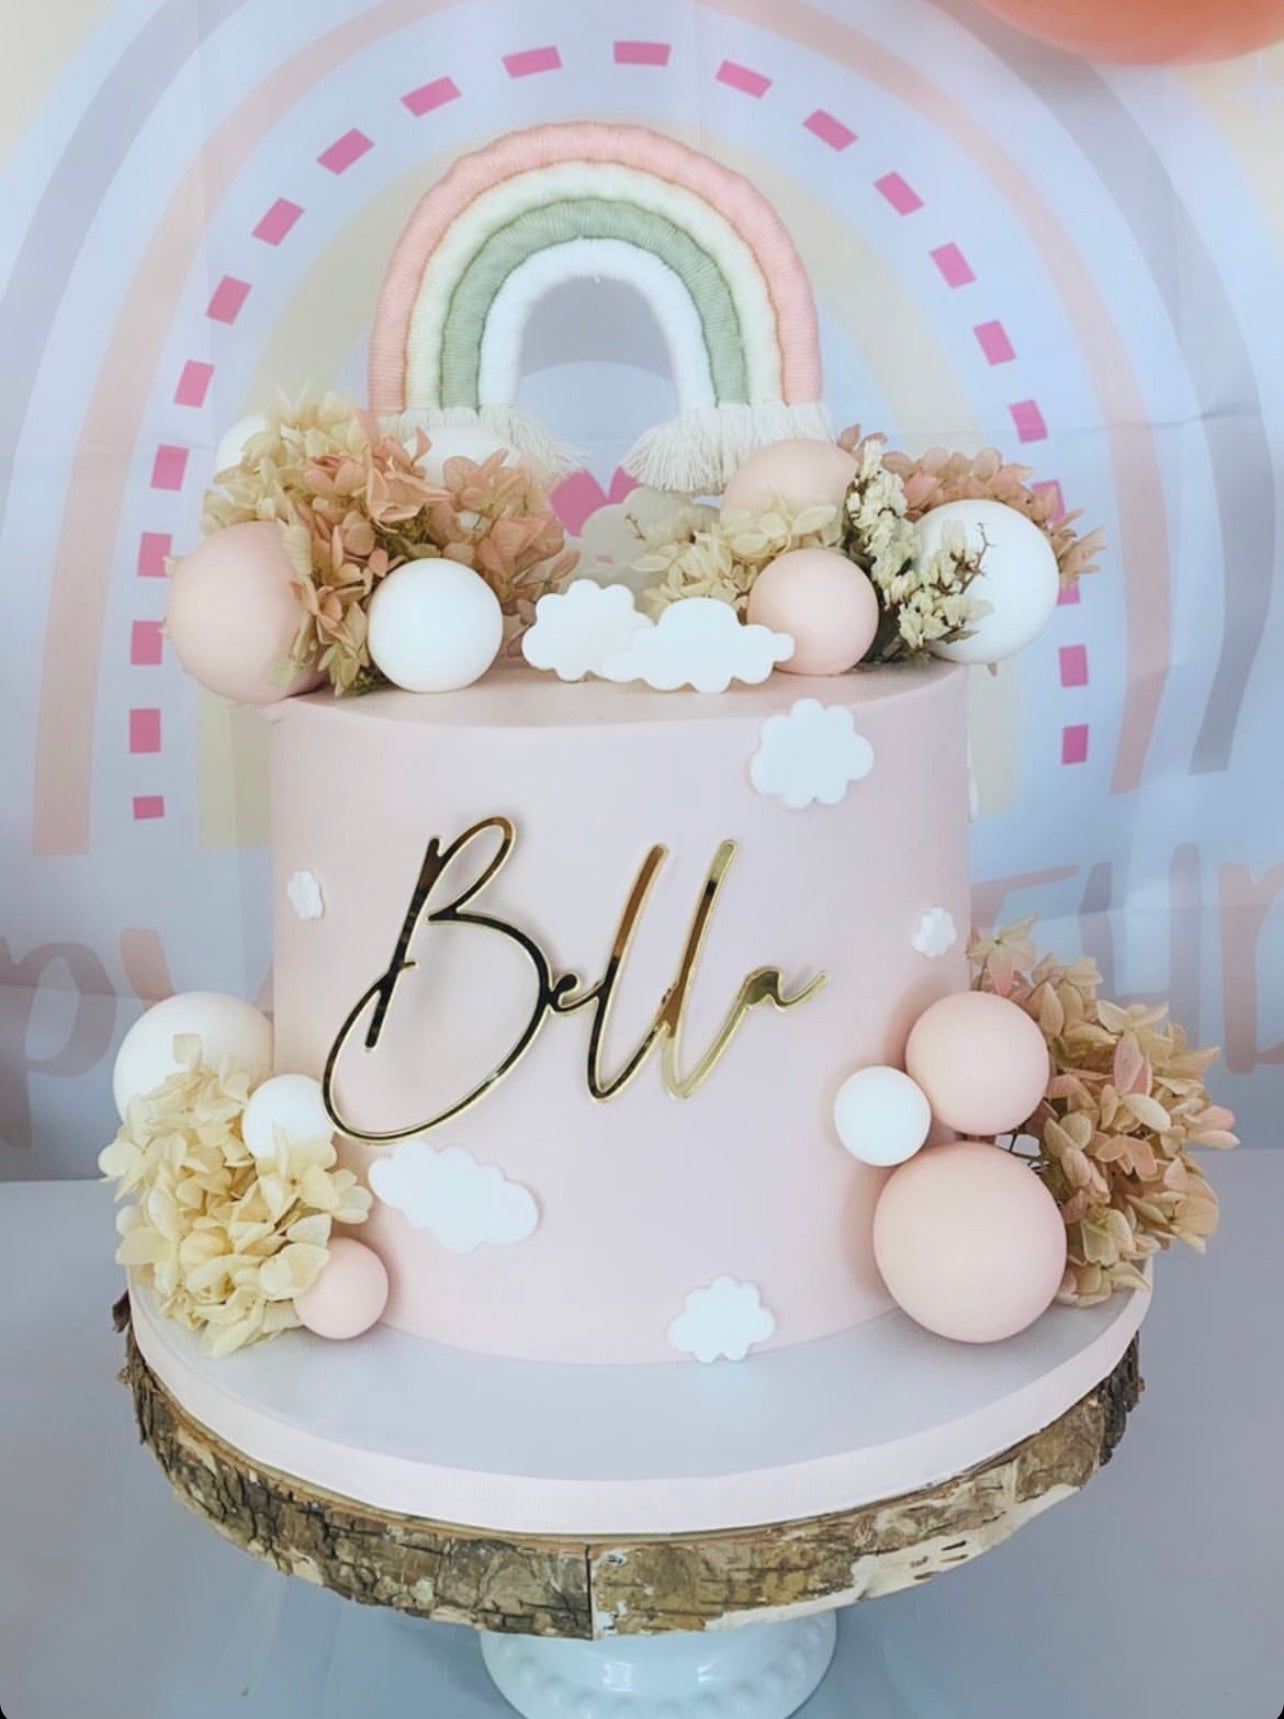 Name cake charm • personalized cake charm • minimalist cake charm